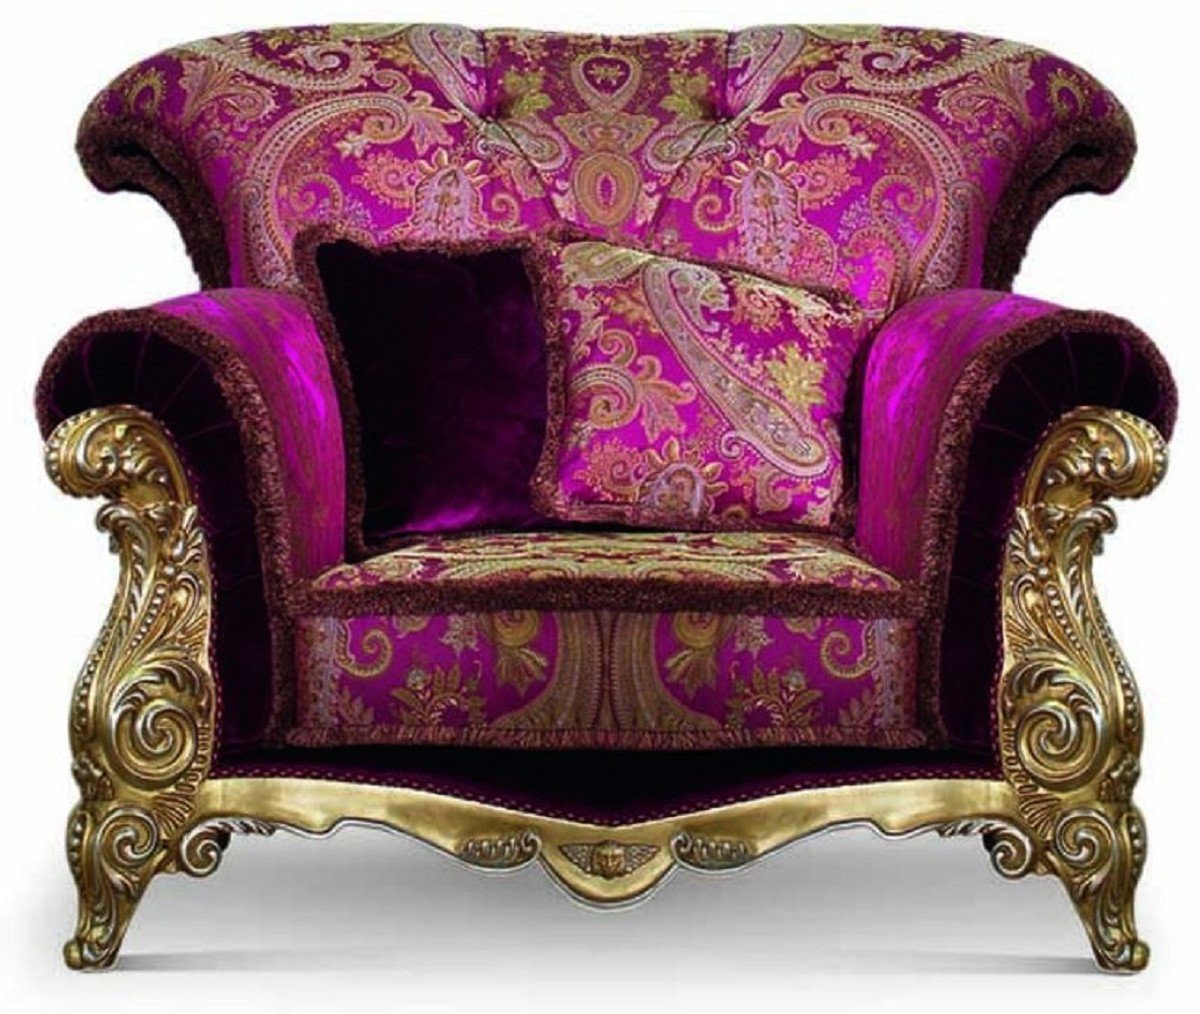 Casa Padrino Sessel Casa Padrino Luxus Barock Sessel Lila / Gold - Barockstil Wohnzimmer Sessel mit elegantem Muster - Barock Möbel - Barock Wohnzimmer & Hotel Möbel - Luxus Qualität - Made in Italy